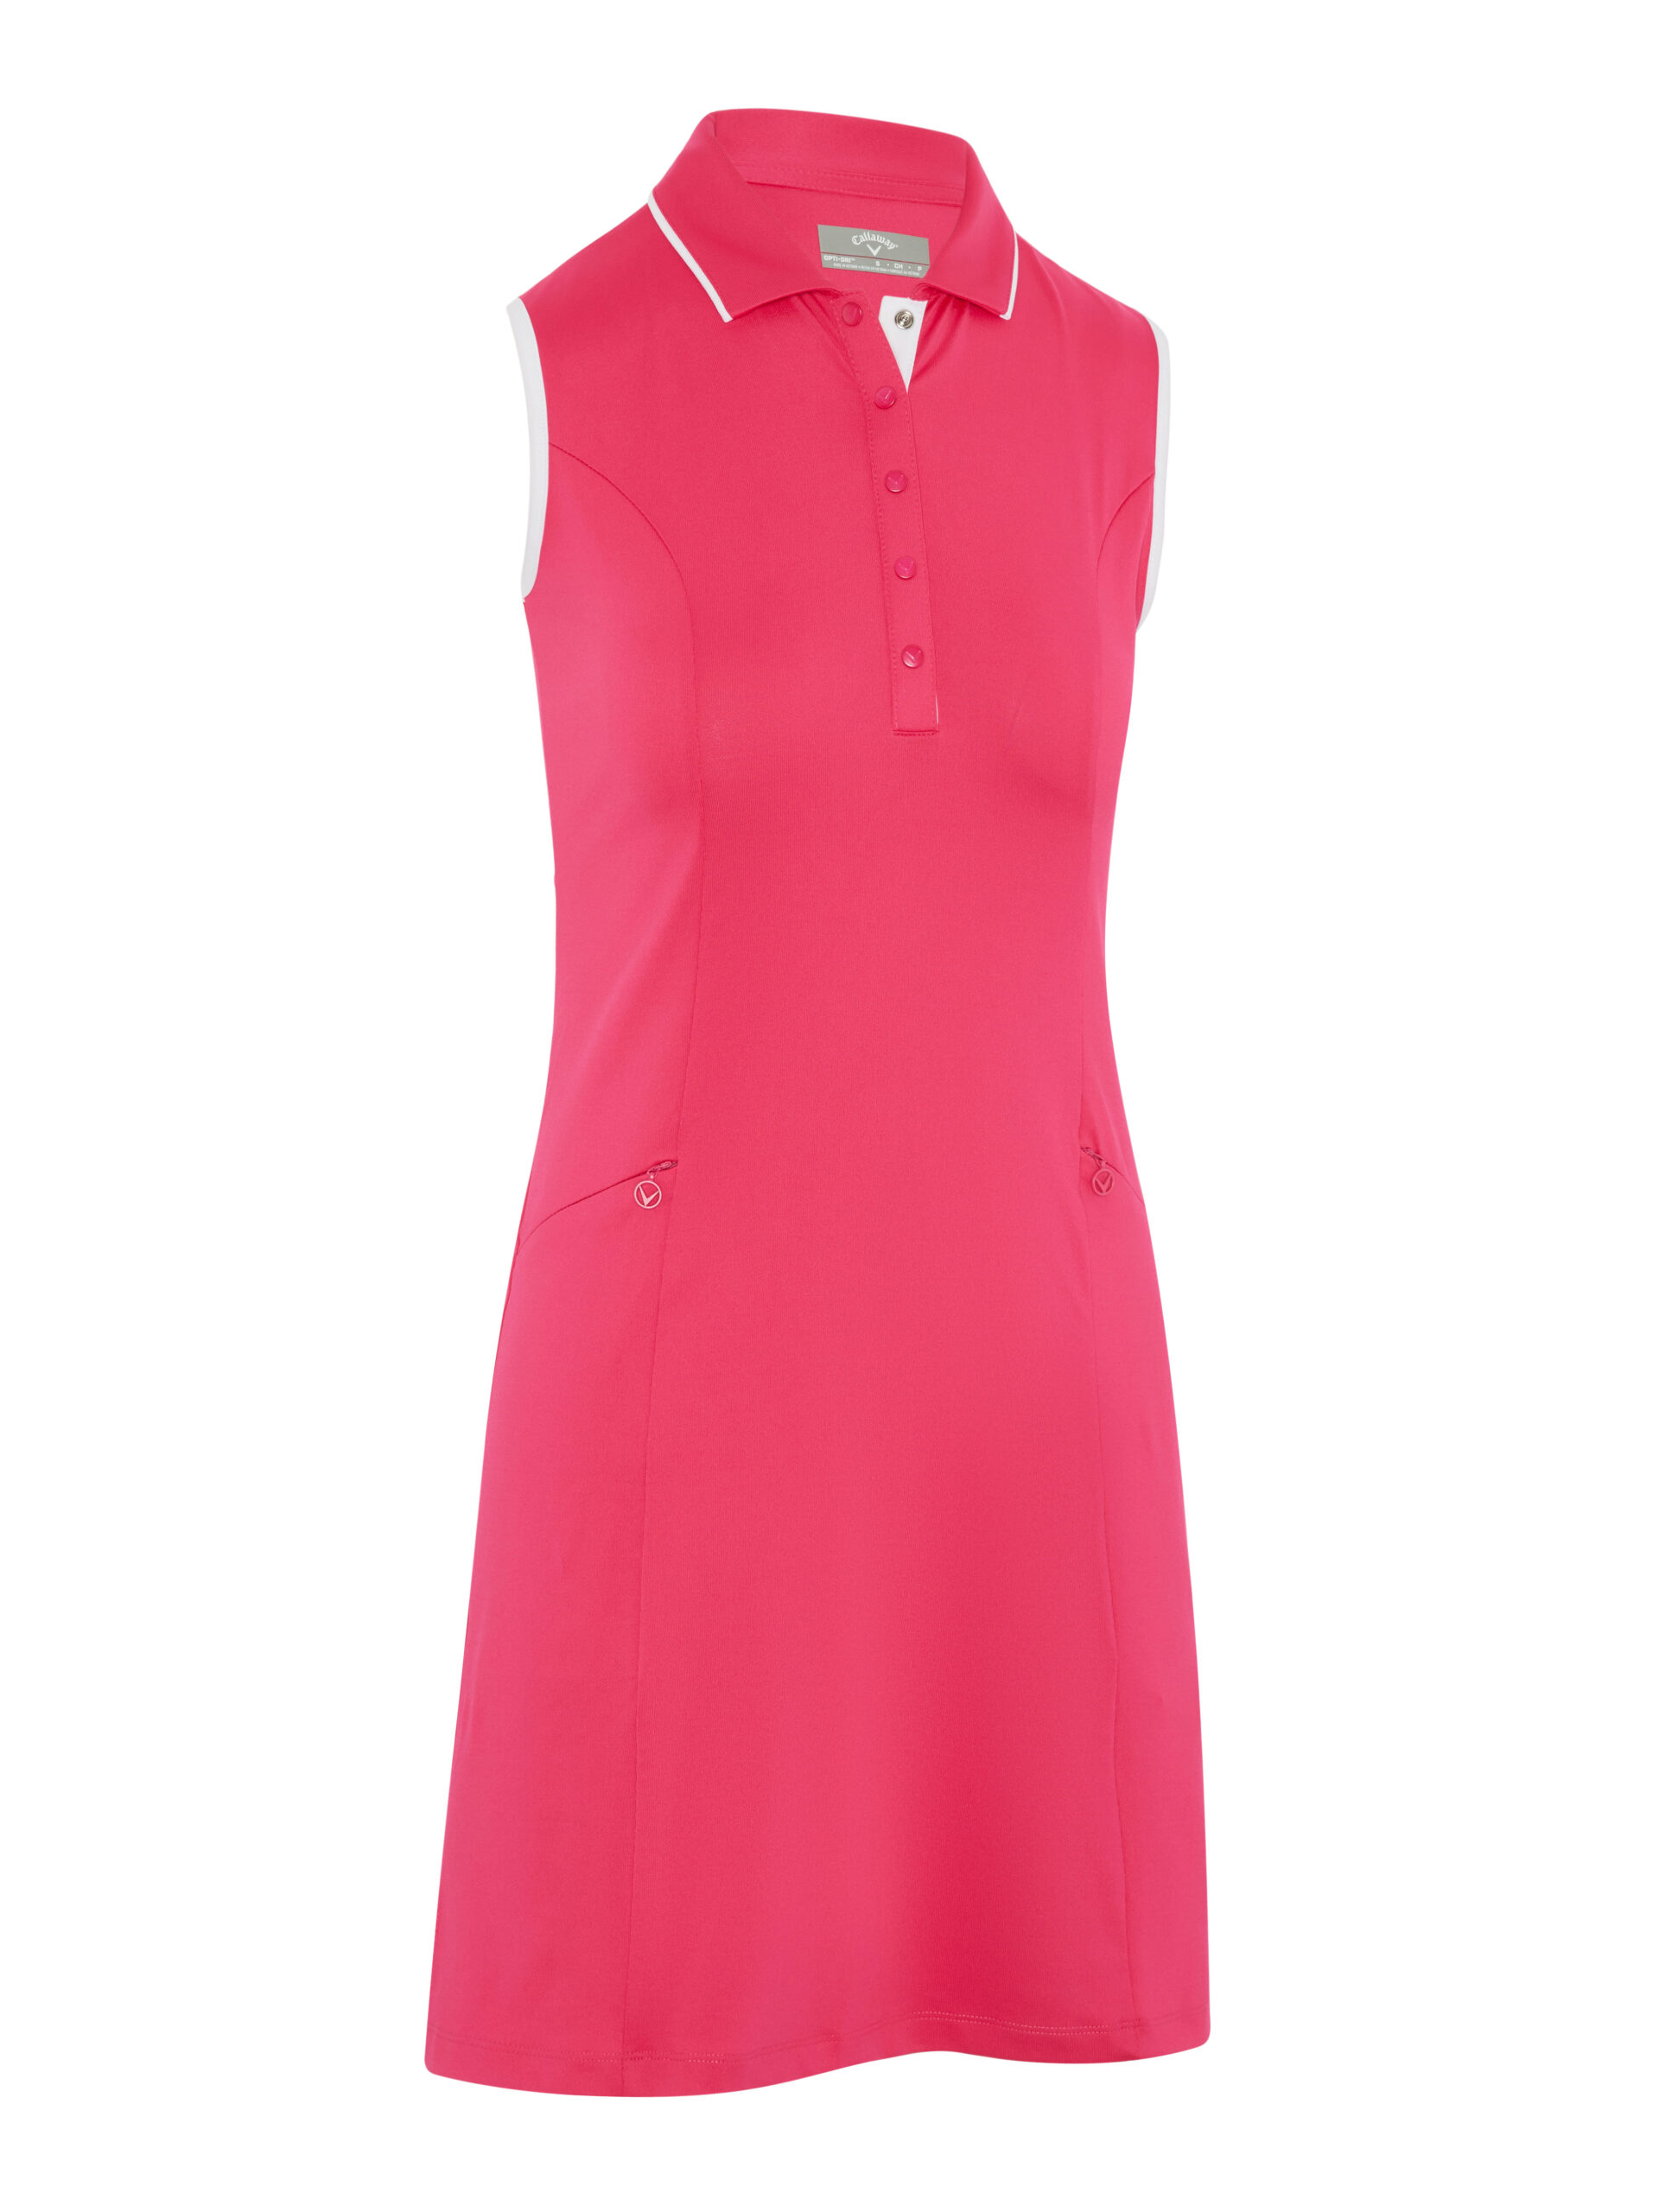 Callaway dámské golfové šaty, růžové, vel. XS